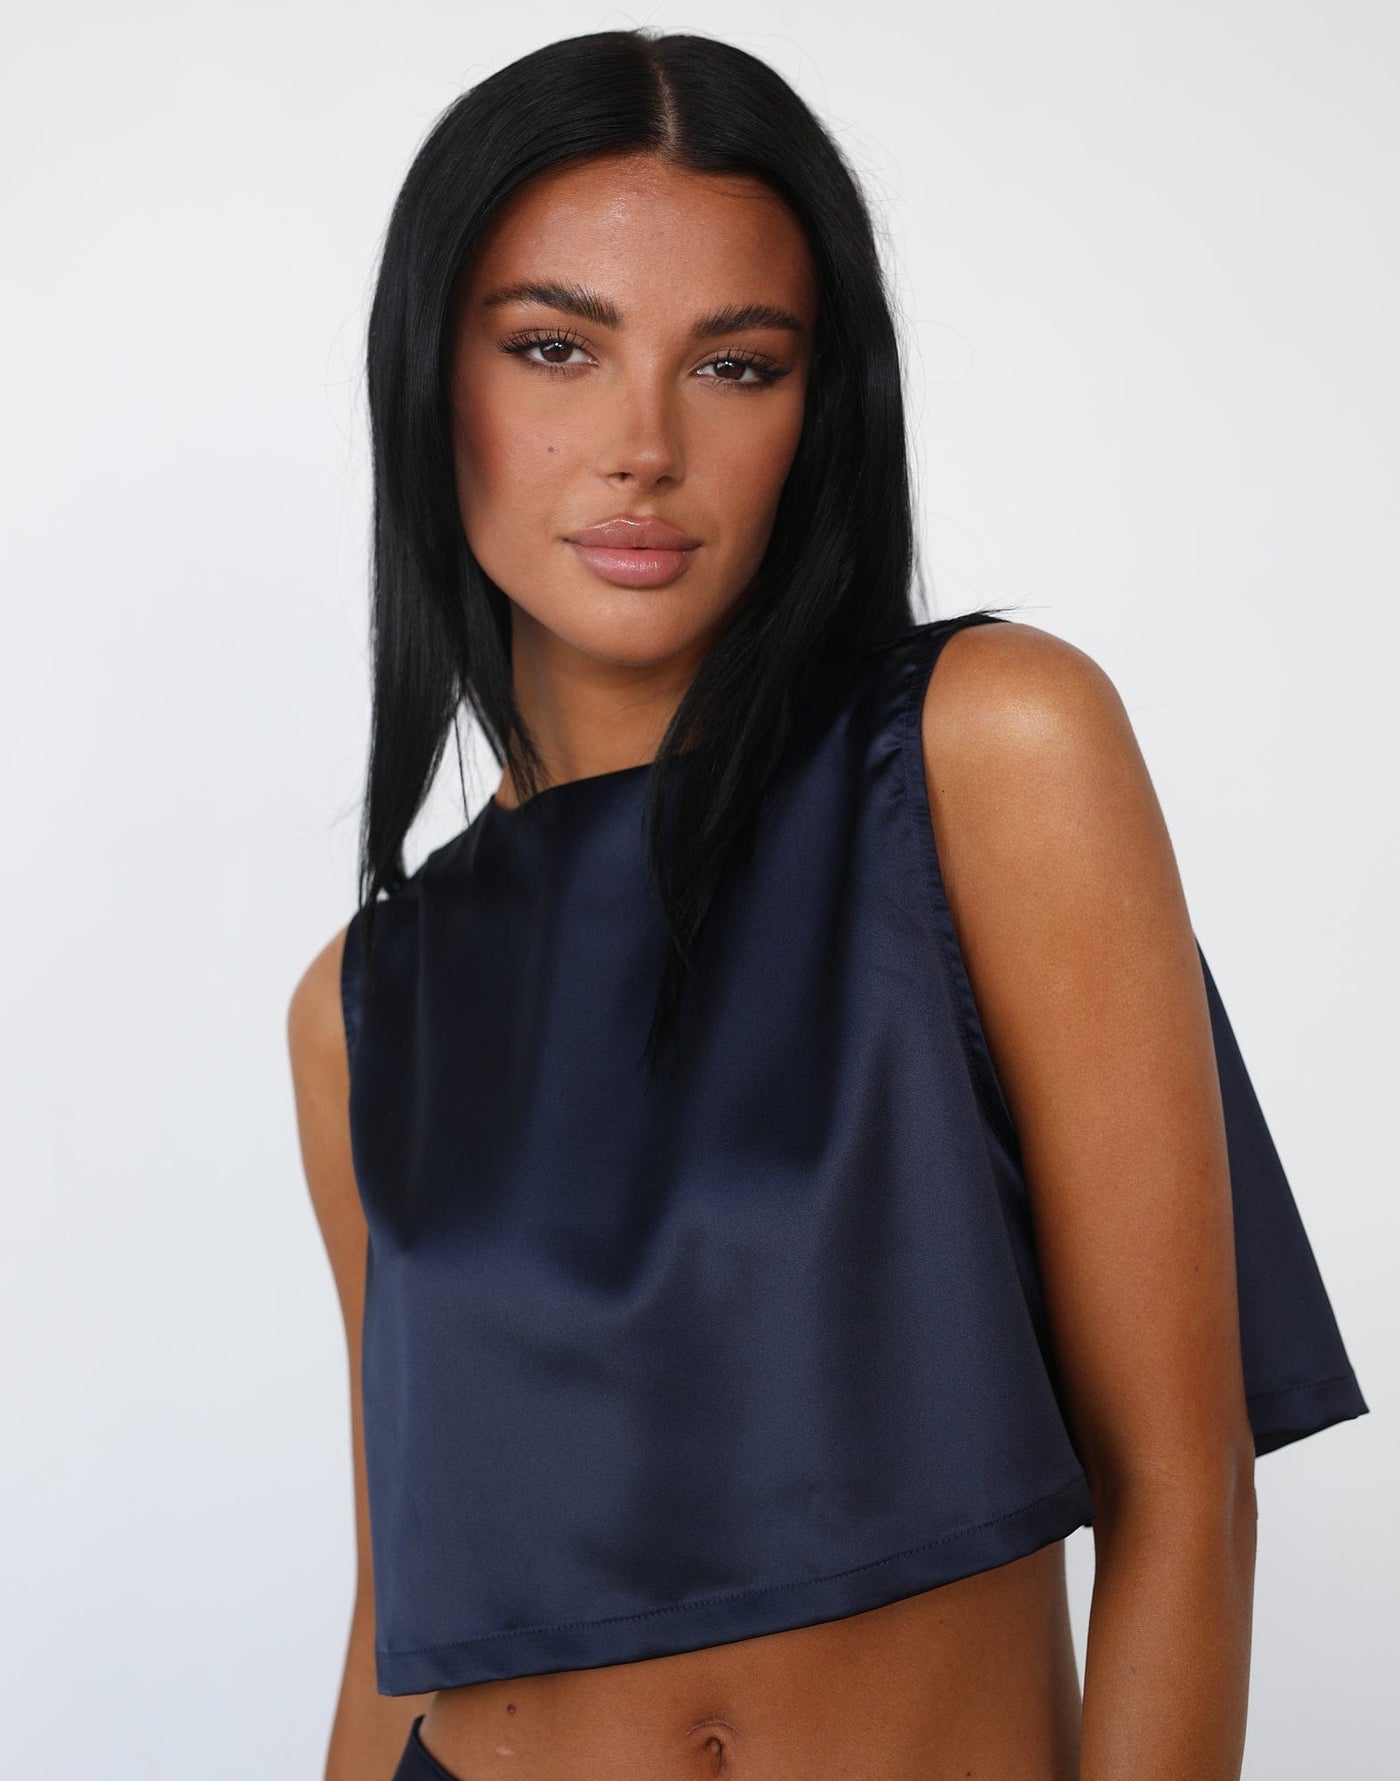 Sincerity Crop Top (Navy) - Open Back Satin-look Sleeveless Top - Women's Top - Charcoal Clothing